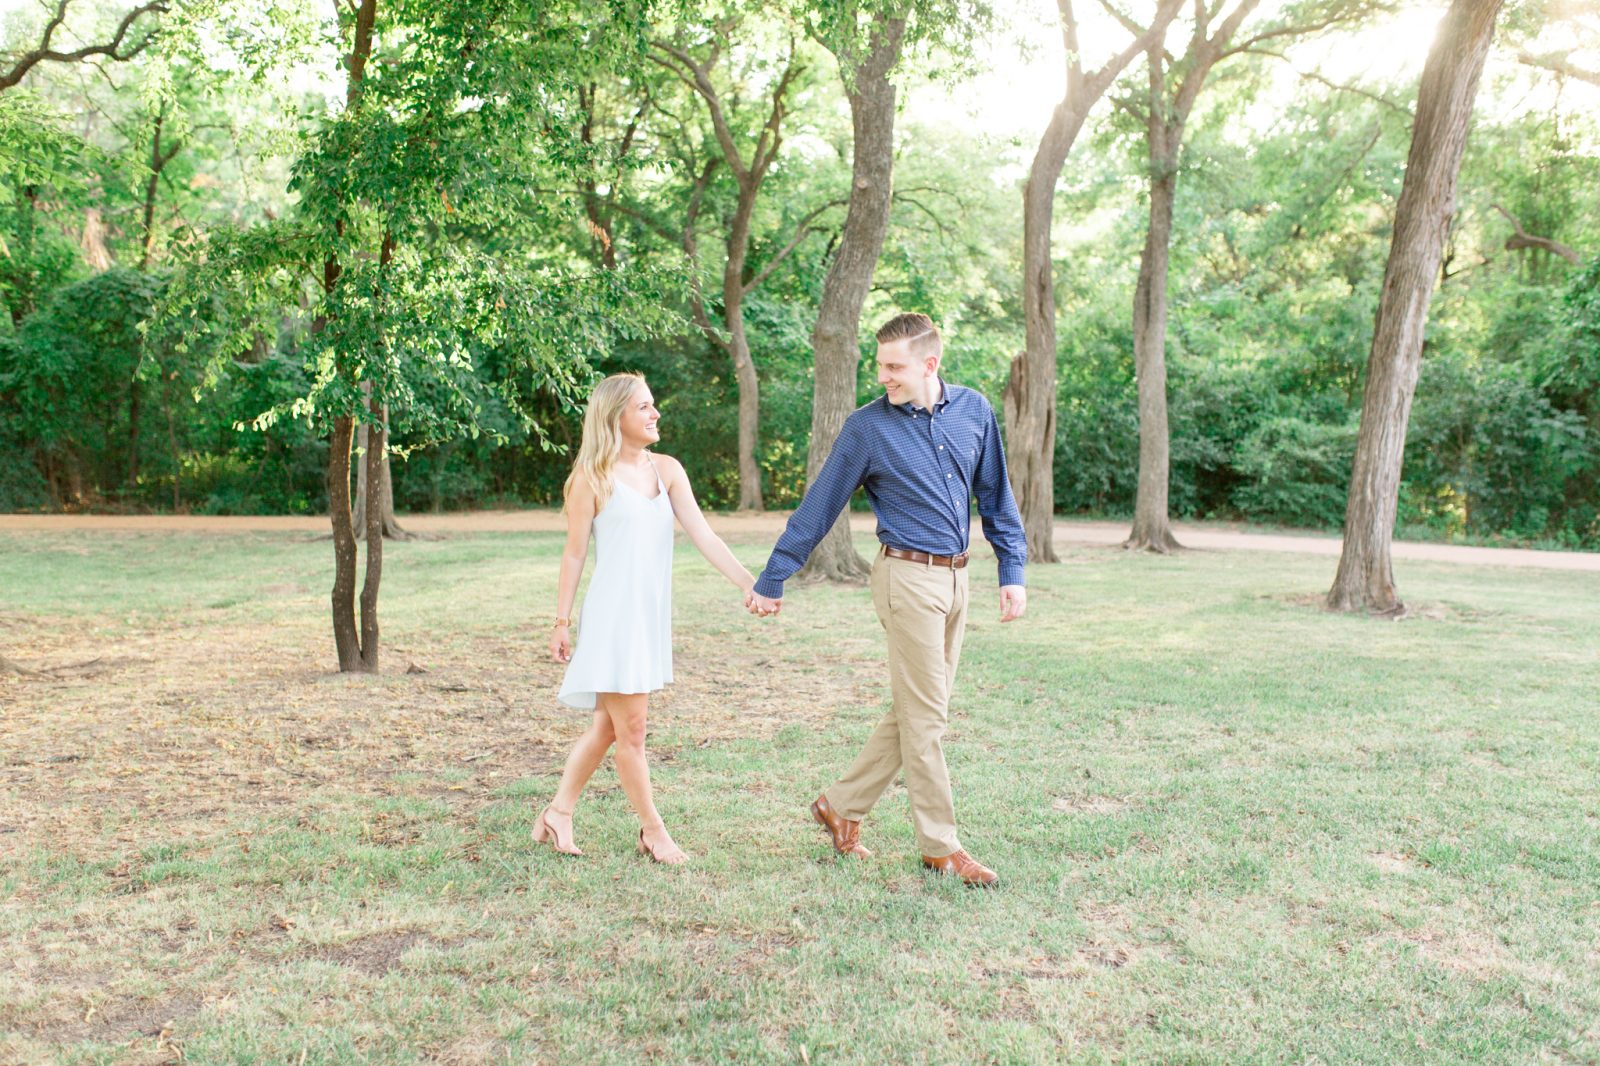 Abby & James | Prairie Creek Park Engagement Session | Dallas Wedding Photographer | Sami Kathryn Photography